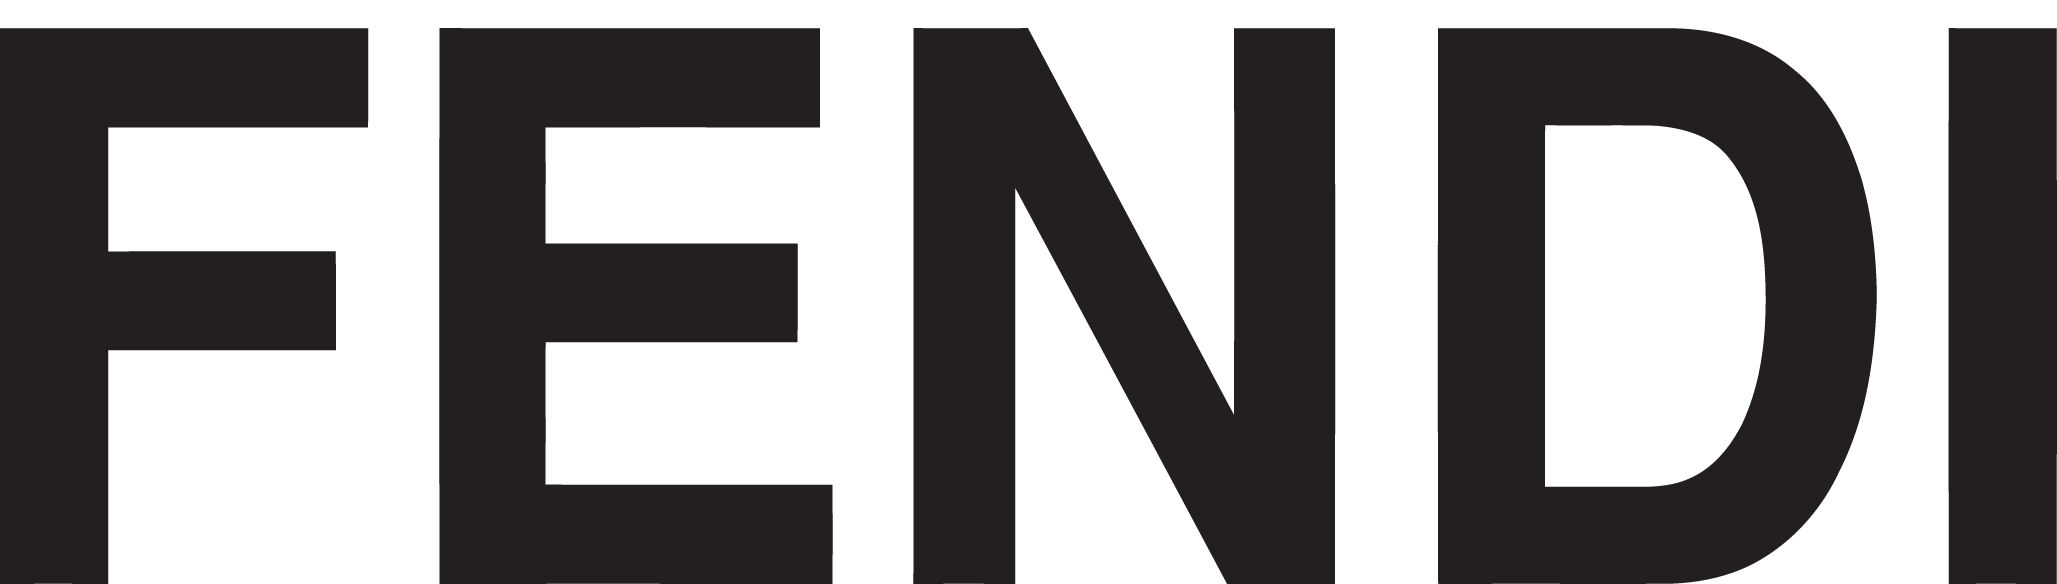 Fendi Logos